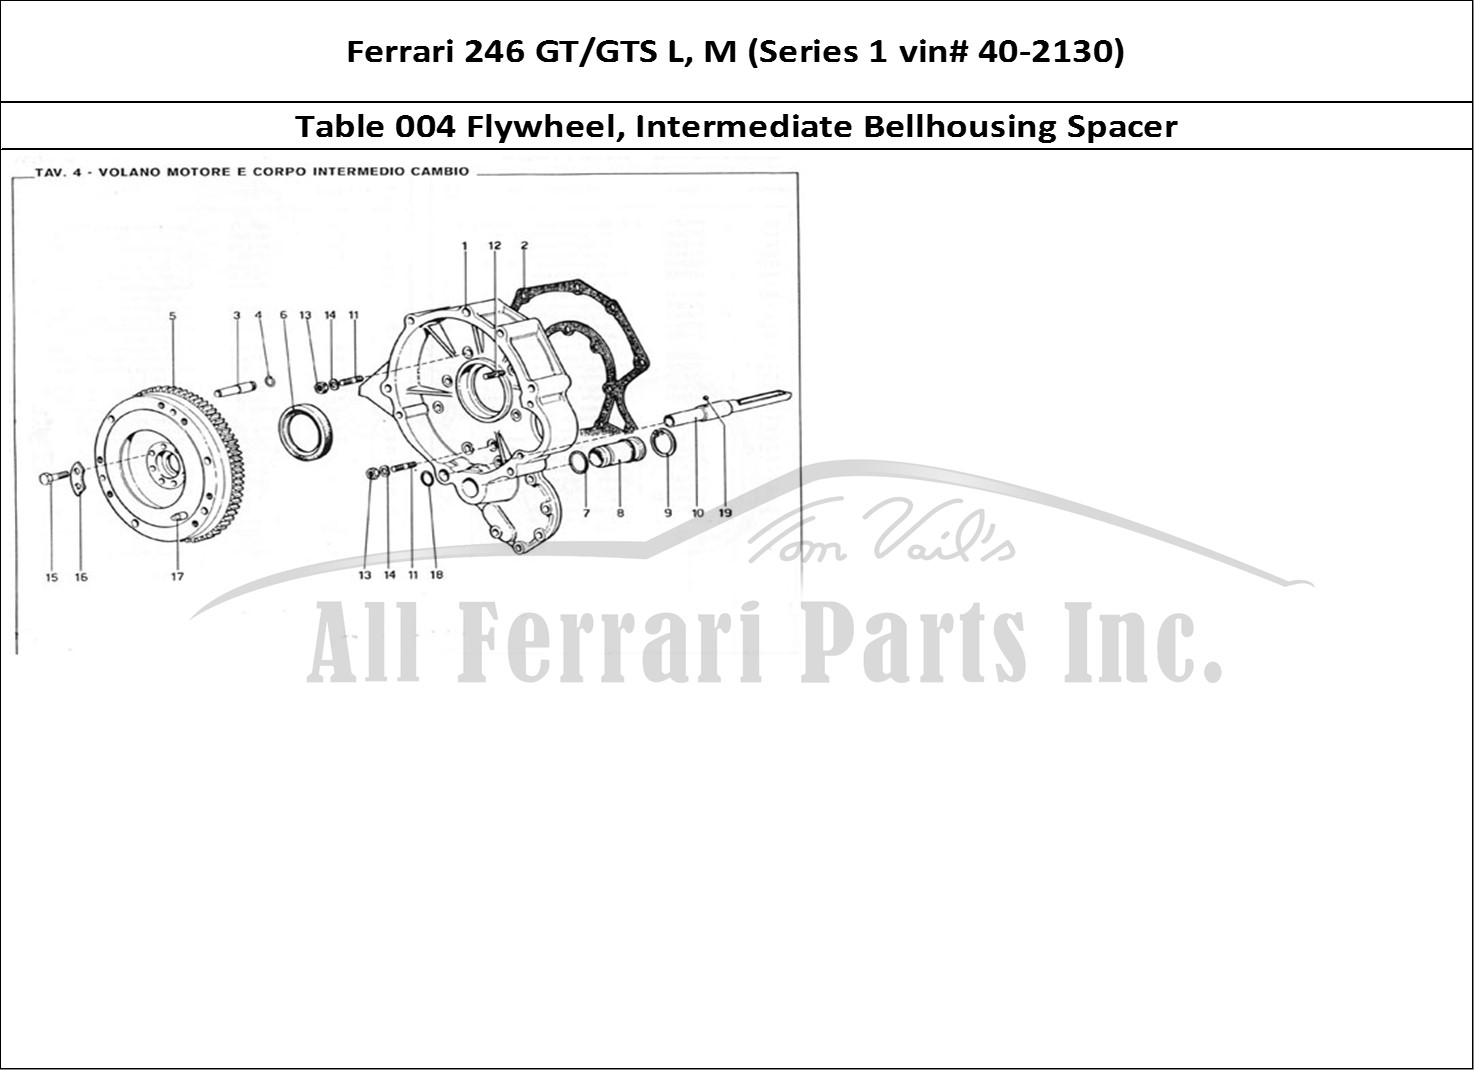 Ferrari Parts Ferrari 246 GT Series 1 Page 004 Flywheel & Intermediate G